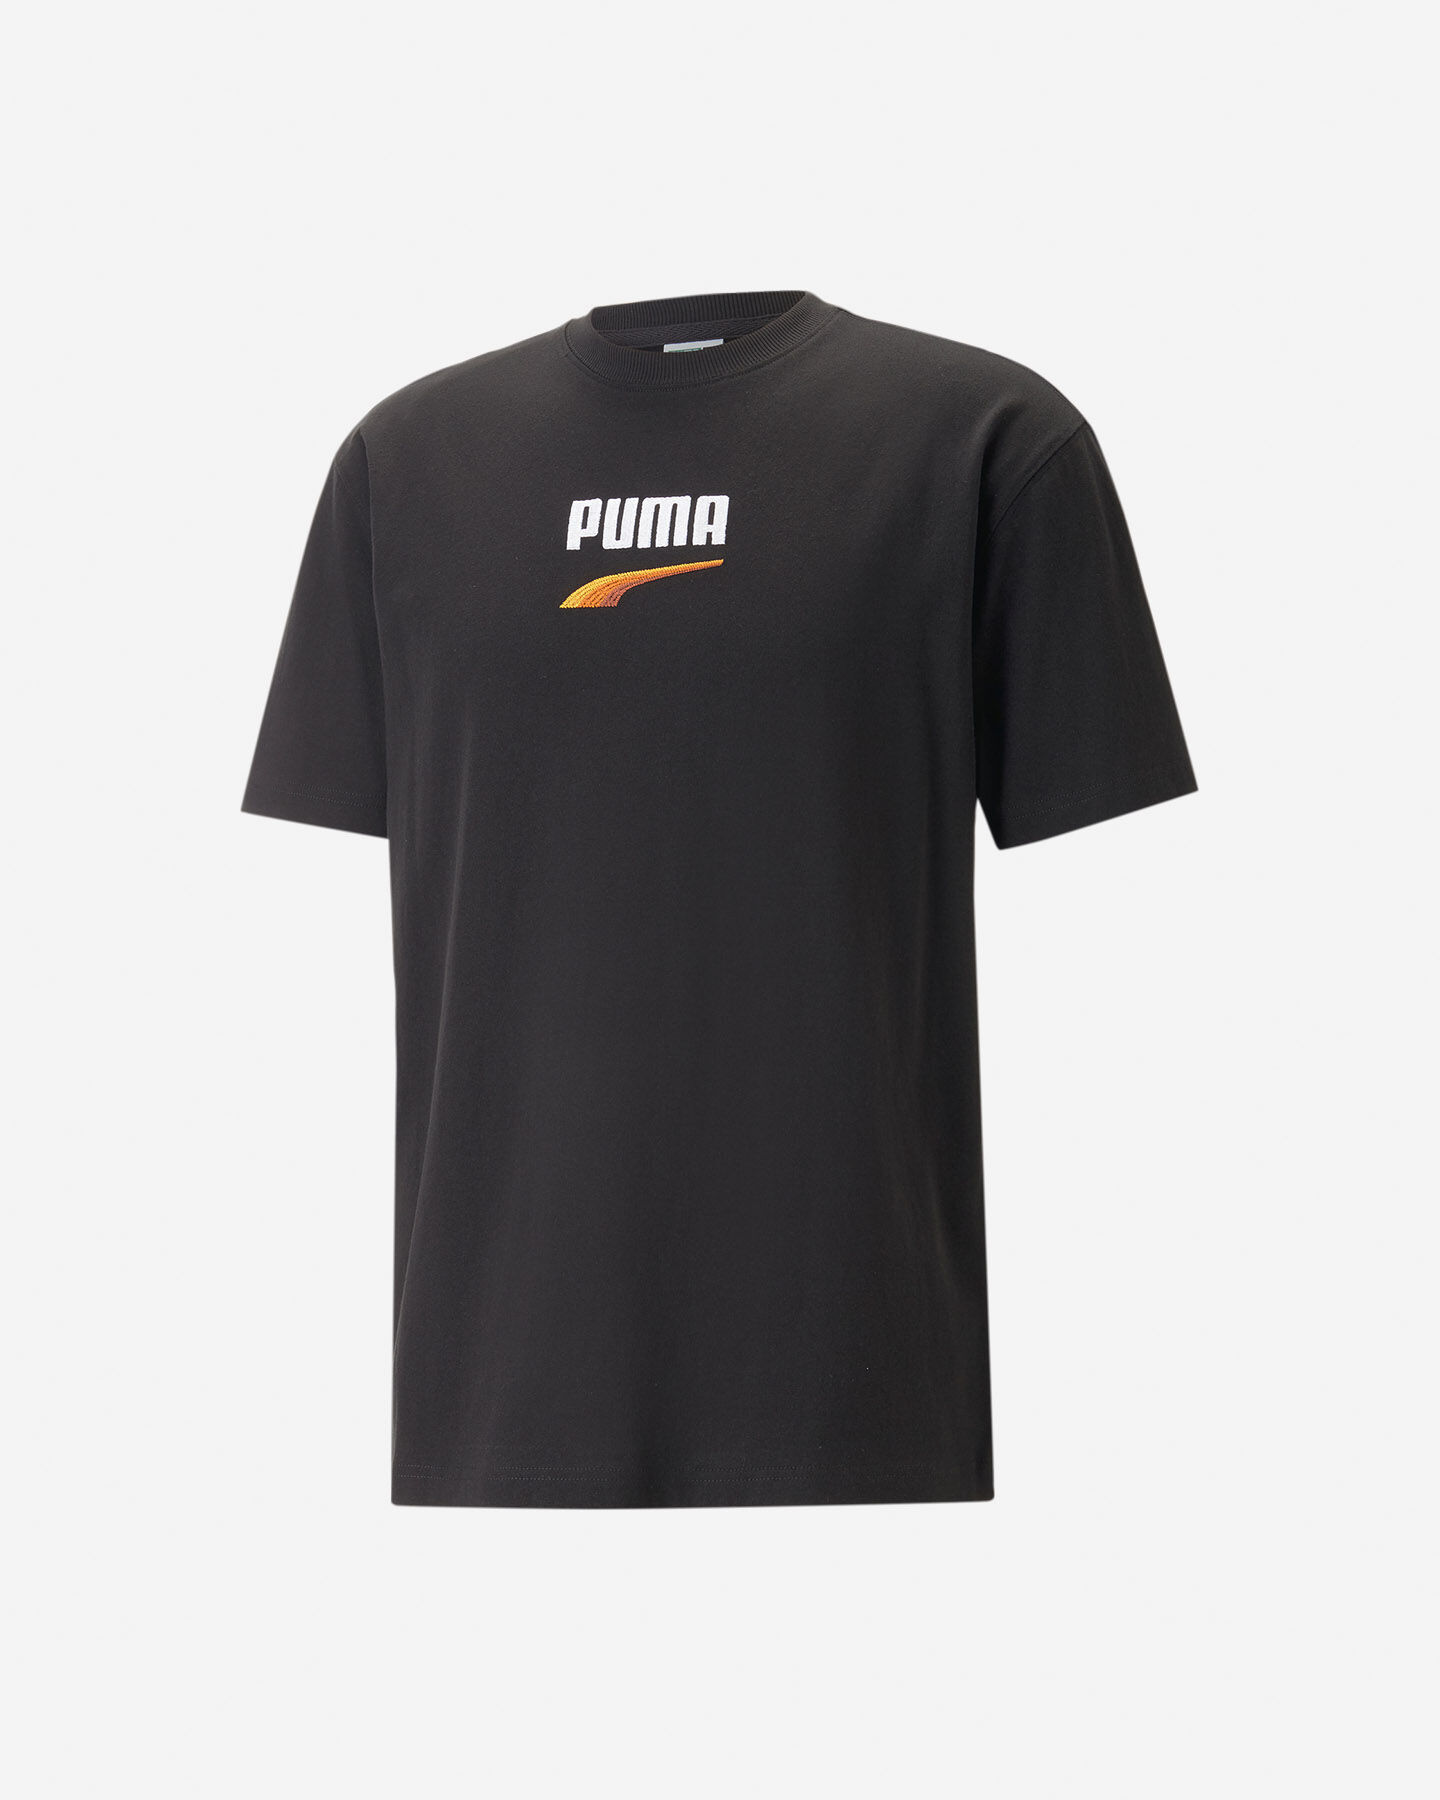  T-Shirt PUMA DOWNTOWN LOGO RICAMATO M S5540902 scatto 0